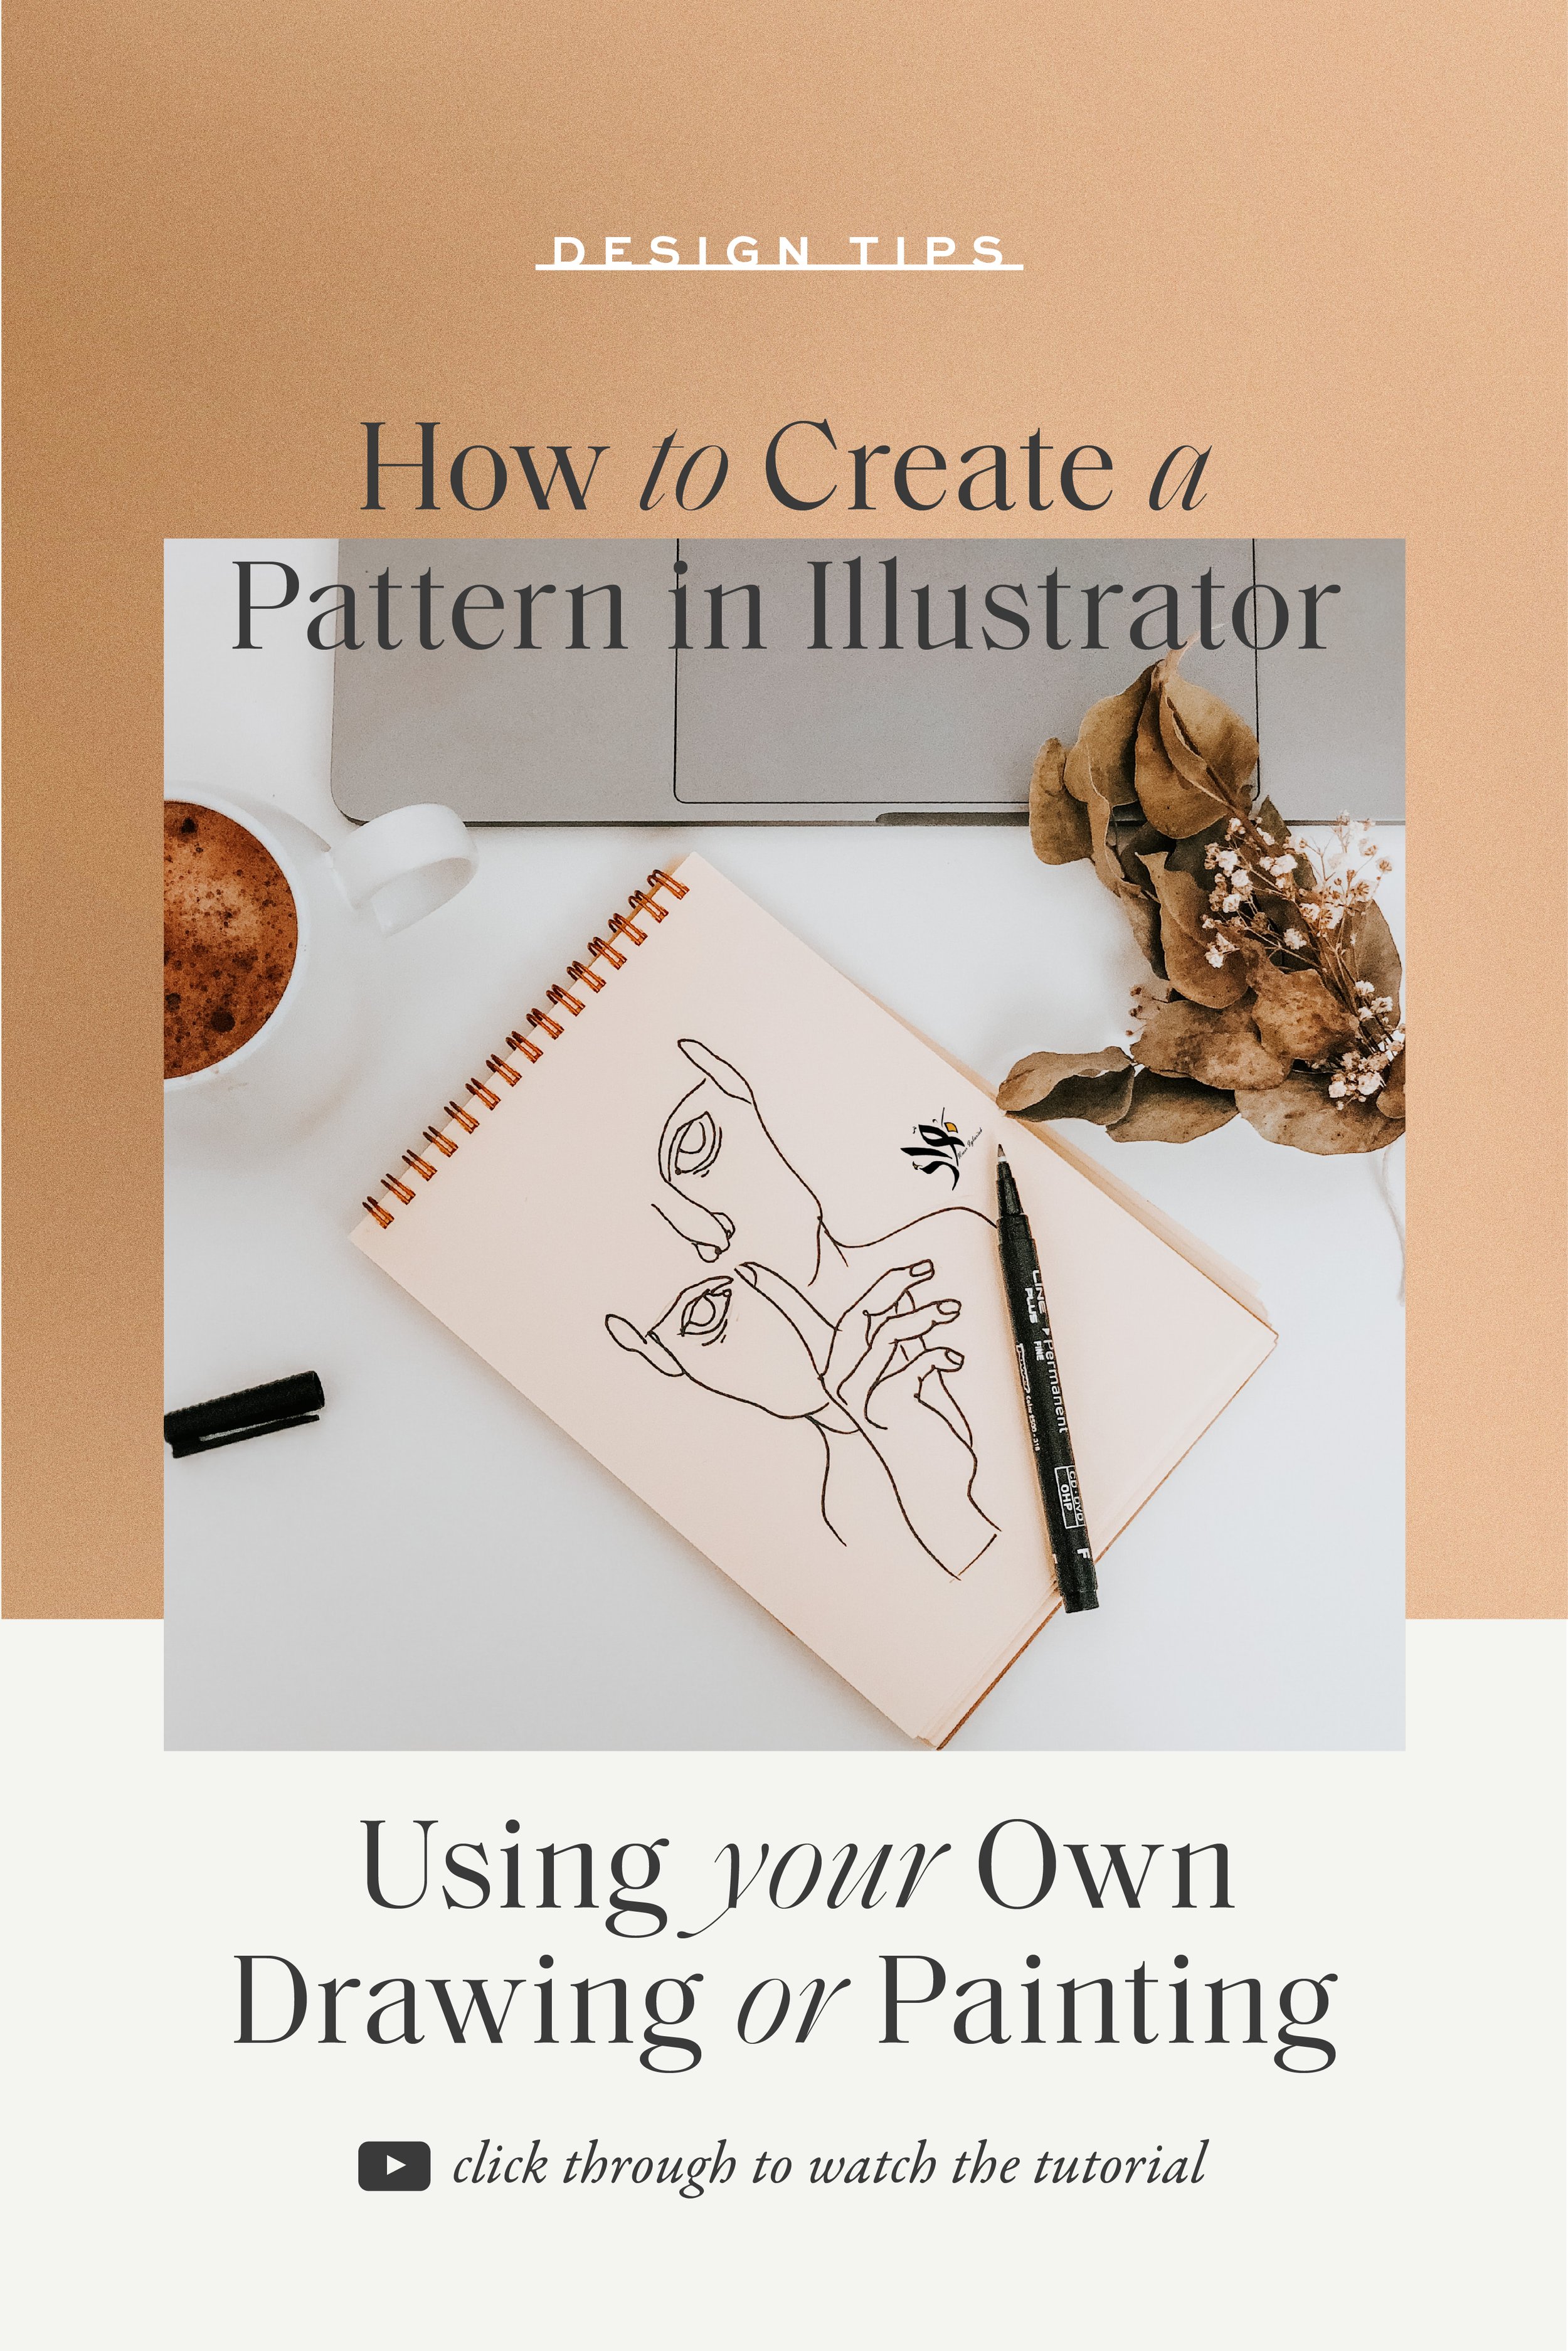 How to Digitize a Sketch in Adobe Illustrator? 4 Steps